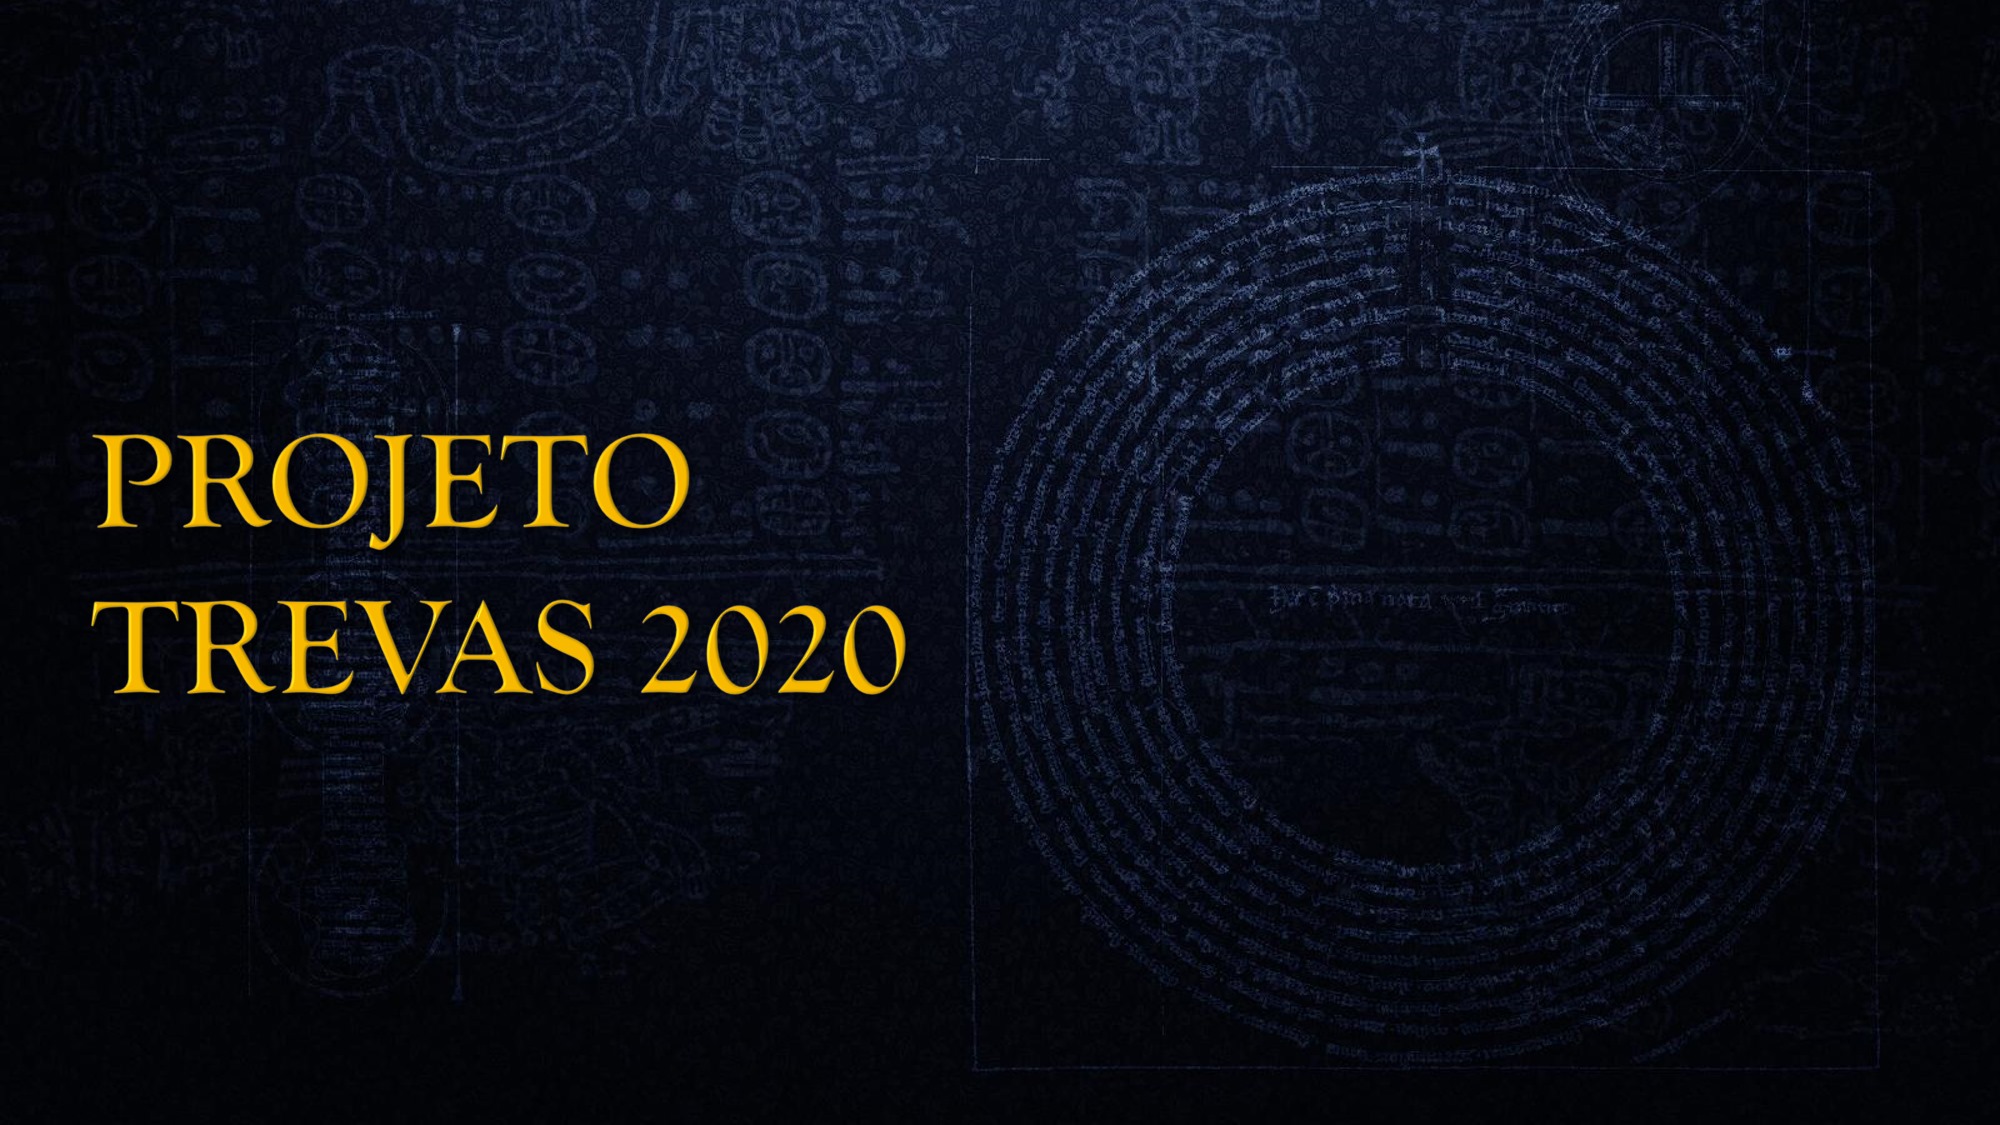 Projeto TREVAS 2020